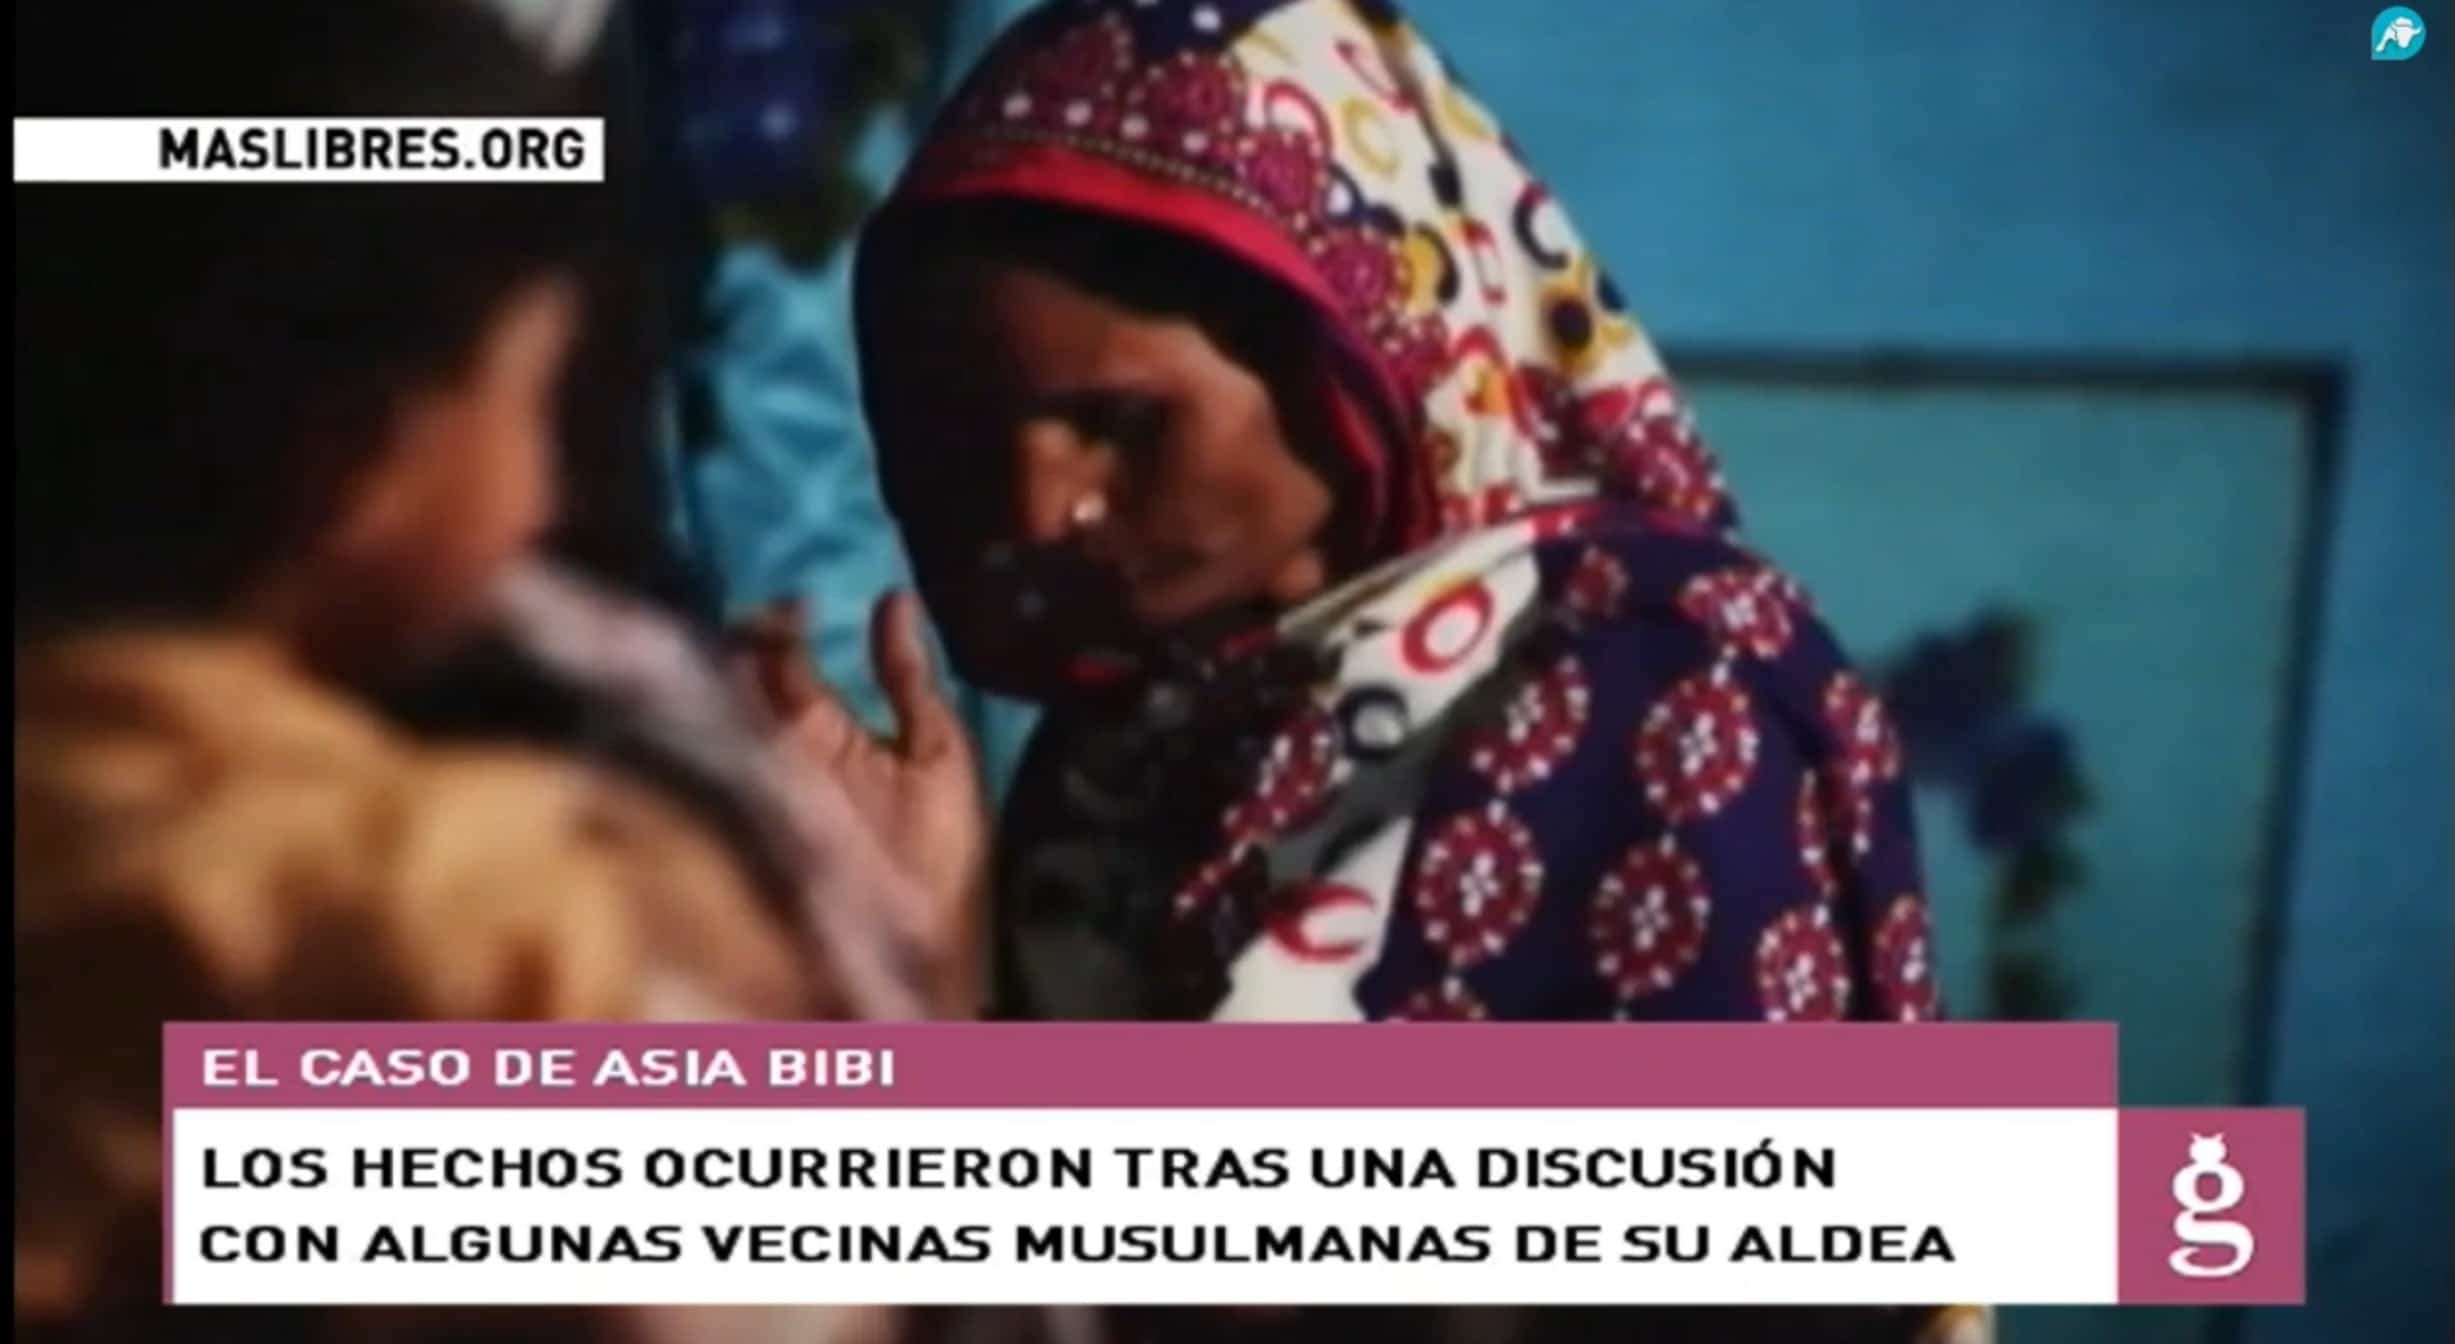 Libertad para Asia Bibi, la cristiana condenada en Pakistán